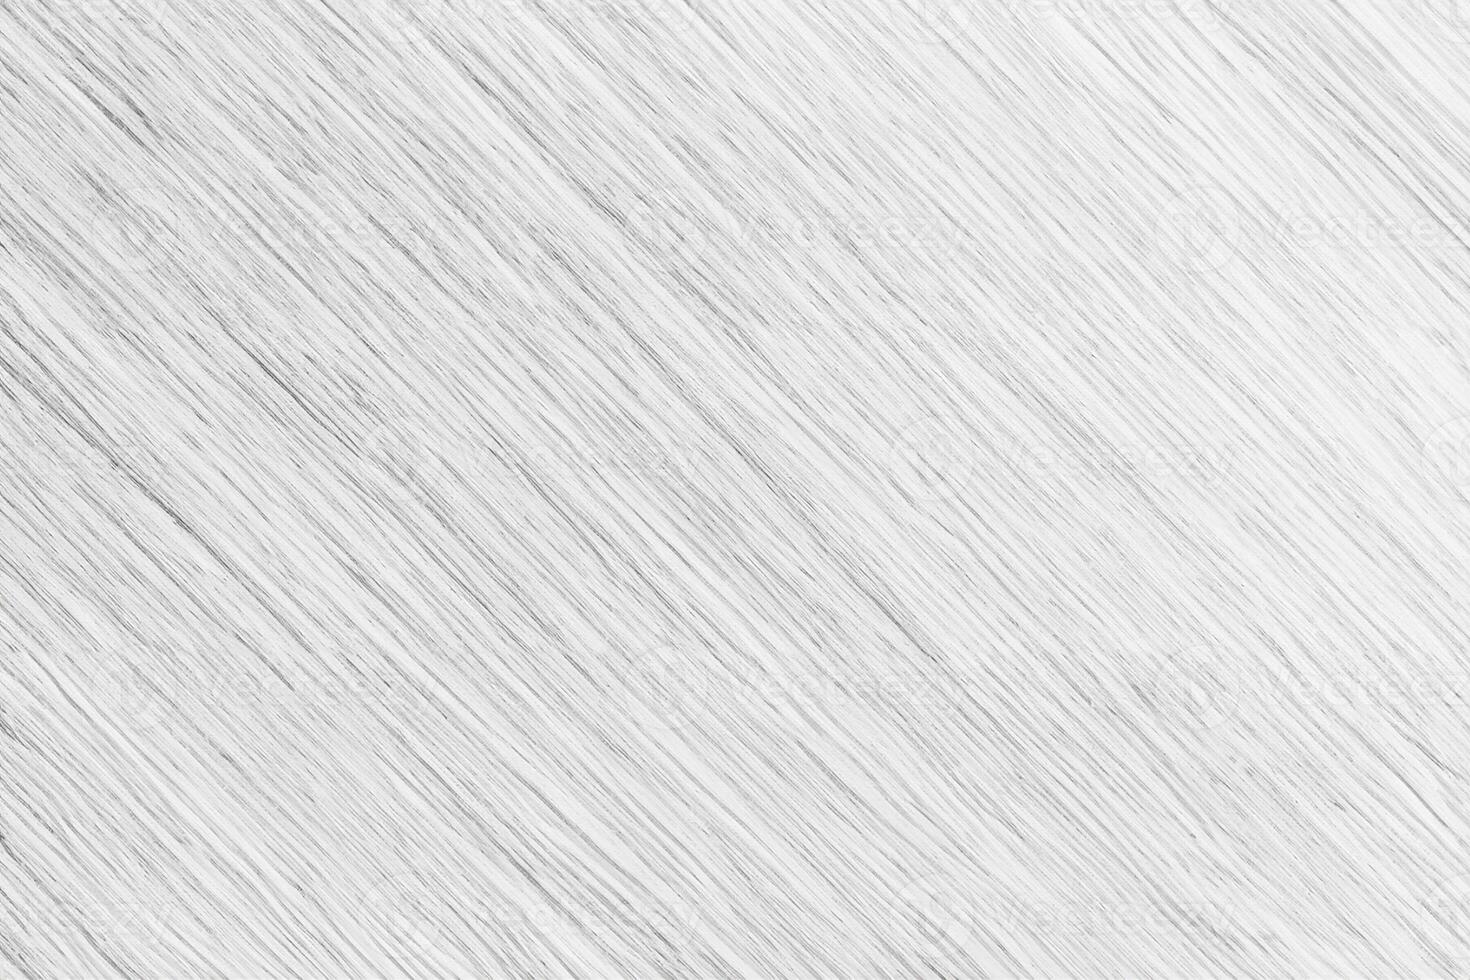 travolgente astratto bianca legna trame, superficie eleganza. foto